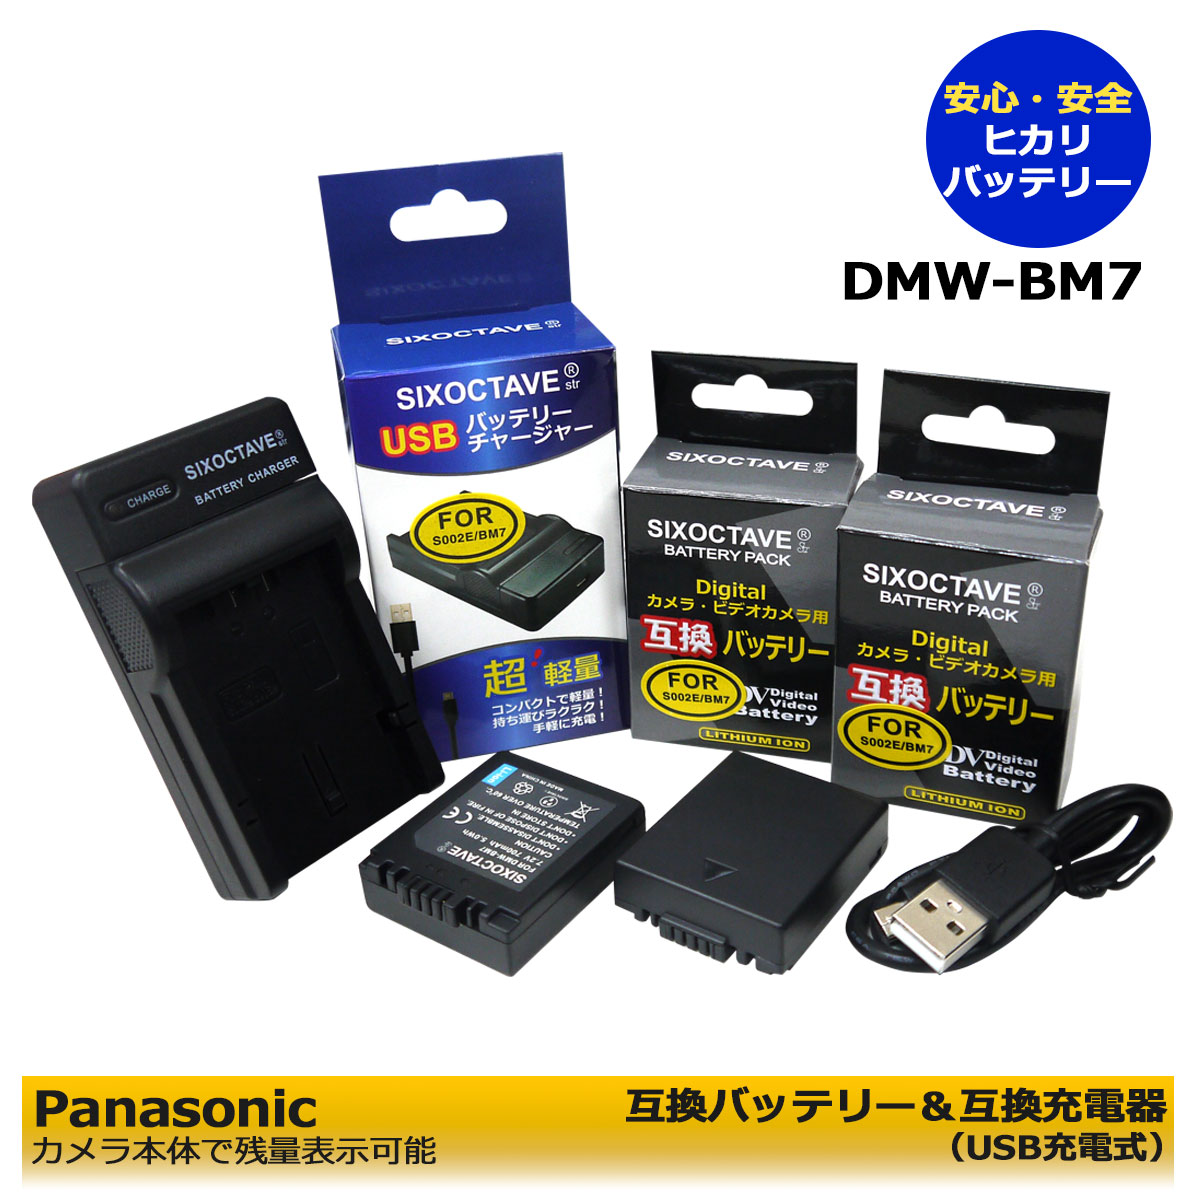 DMW-BM7 パナソニック 互換バッテリー 2個 と 互換USB充電器の3点セット 残量表示可能 Lumix DMC-FZ3GN / Lumix DMC-FZ3PP / Lumix DMC-FZ4 / Lumix DMC-FZ4S / Lumix DMC-FZ4PP / Lumix DMC-FZ3B / Lumix DMC-FZ3EG-S